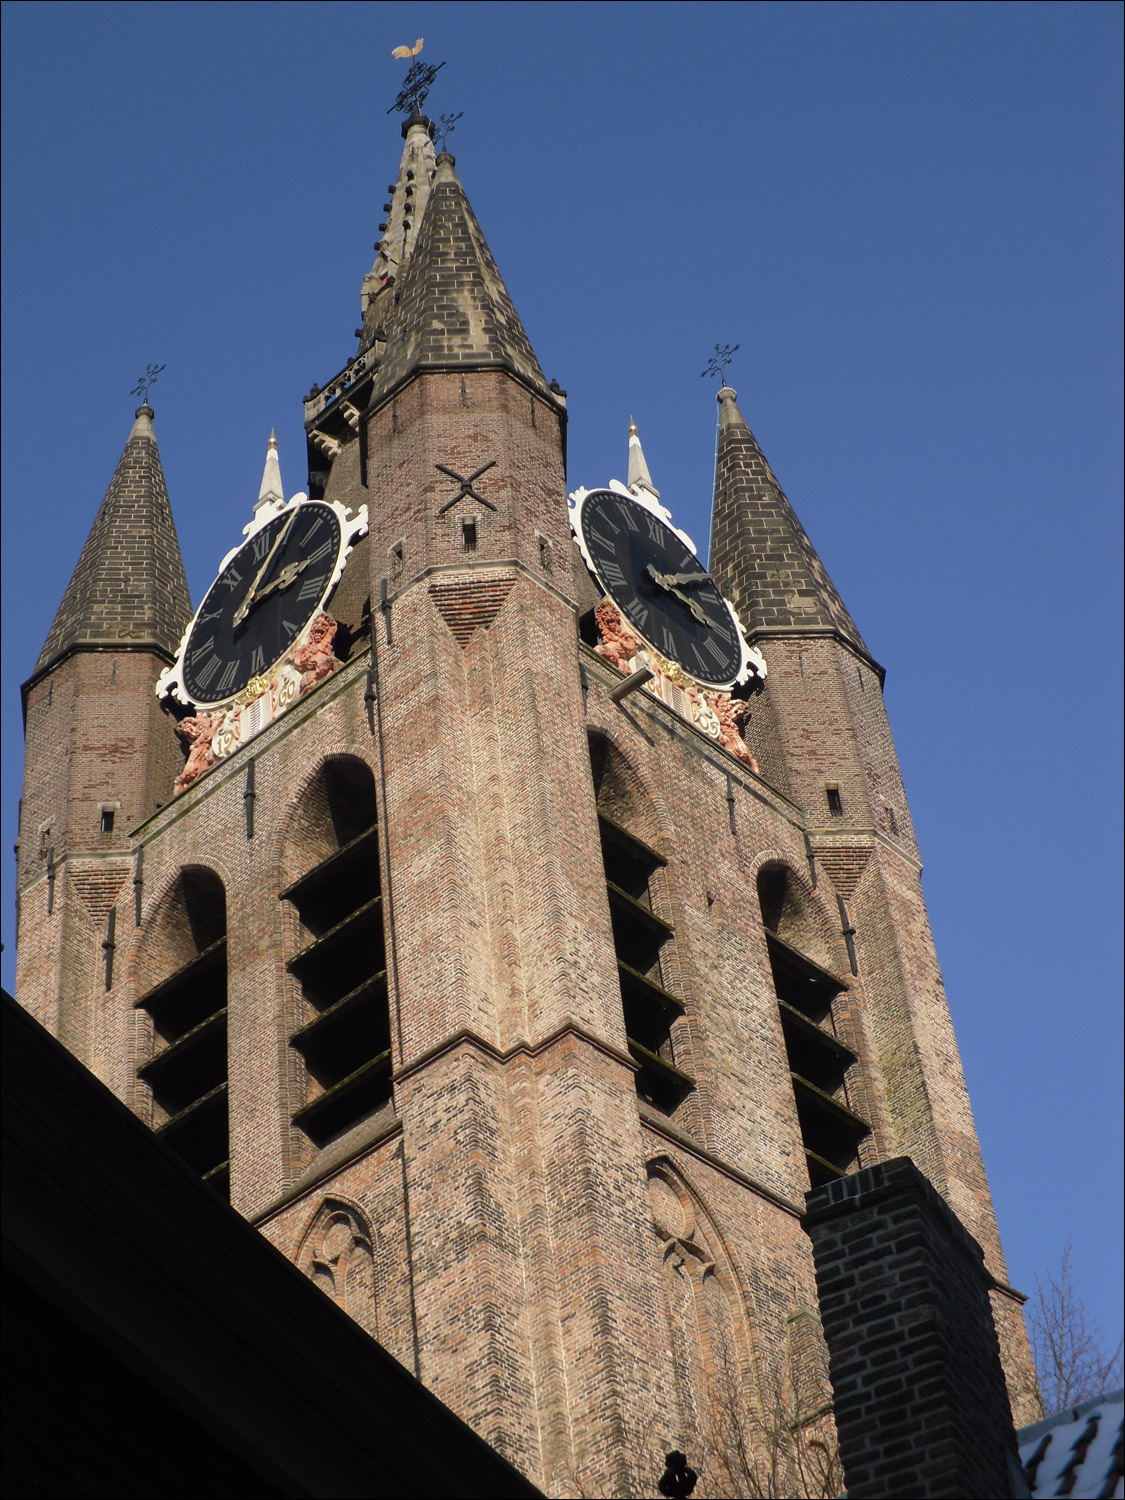 Oude Kerk clock tower